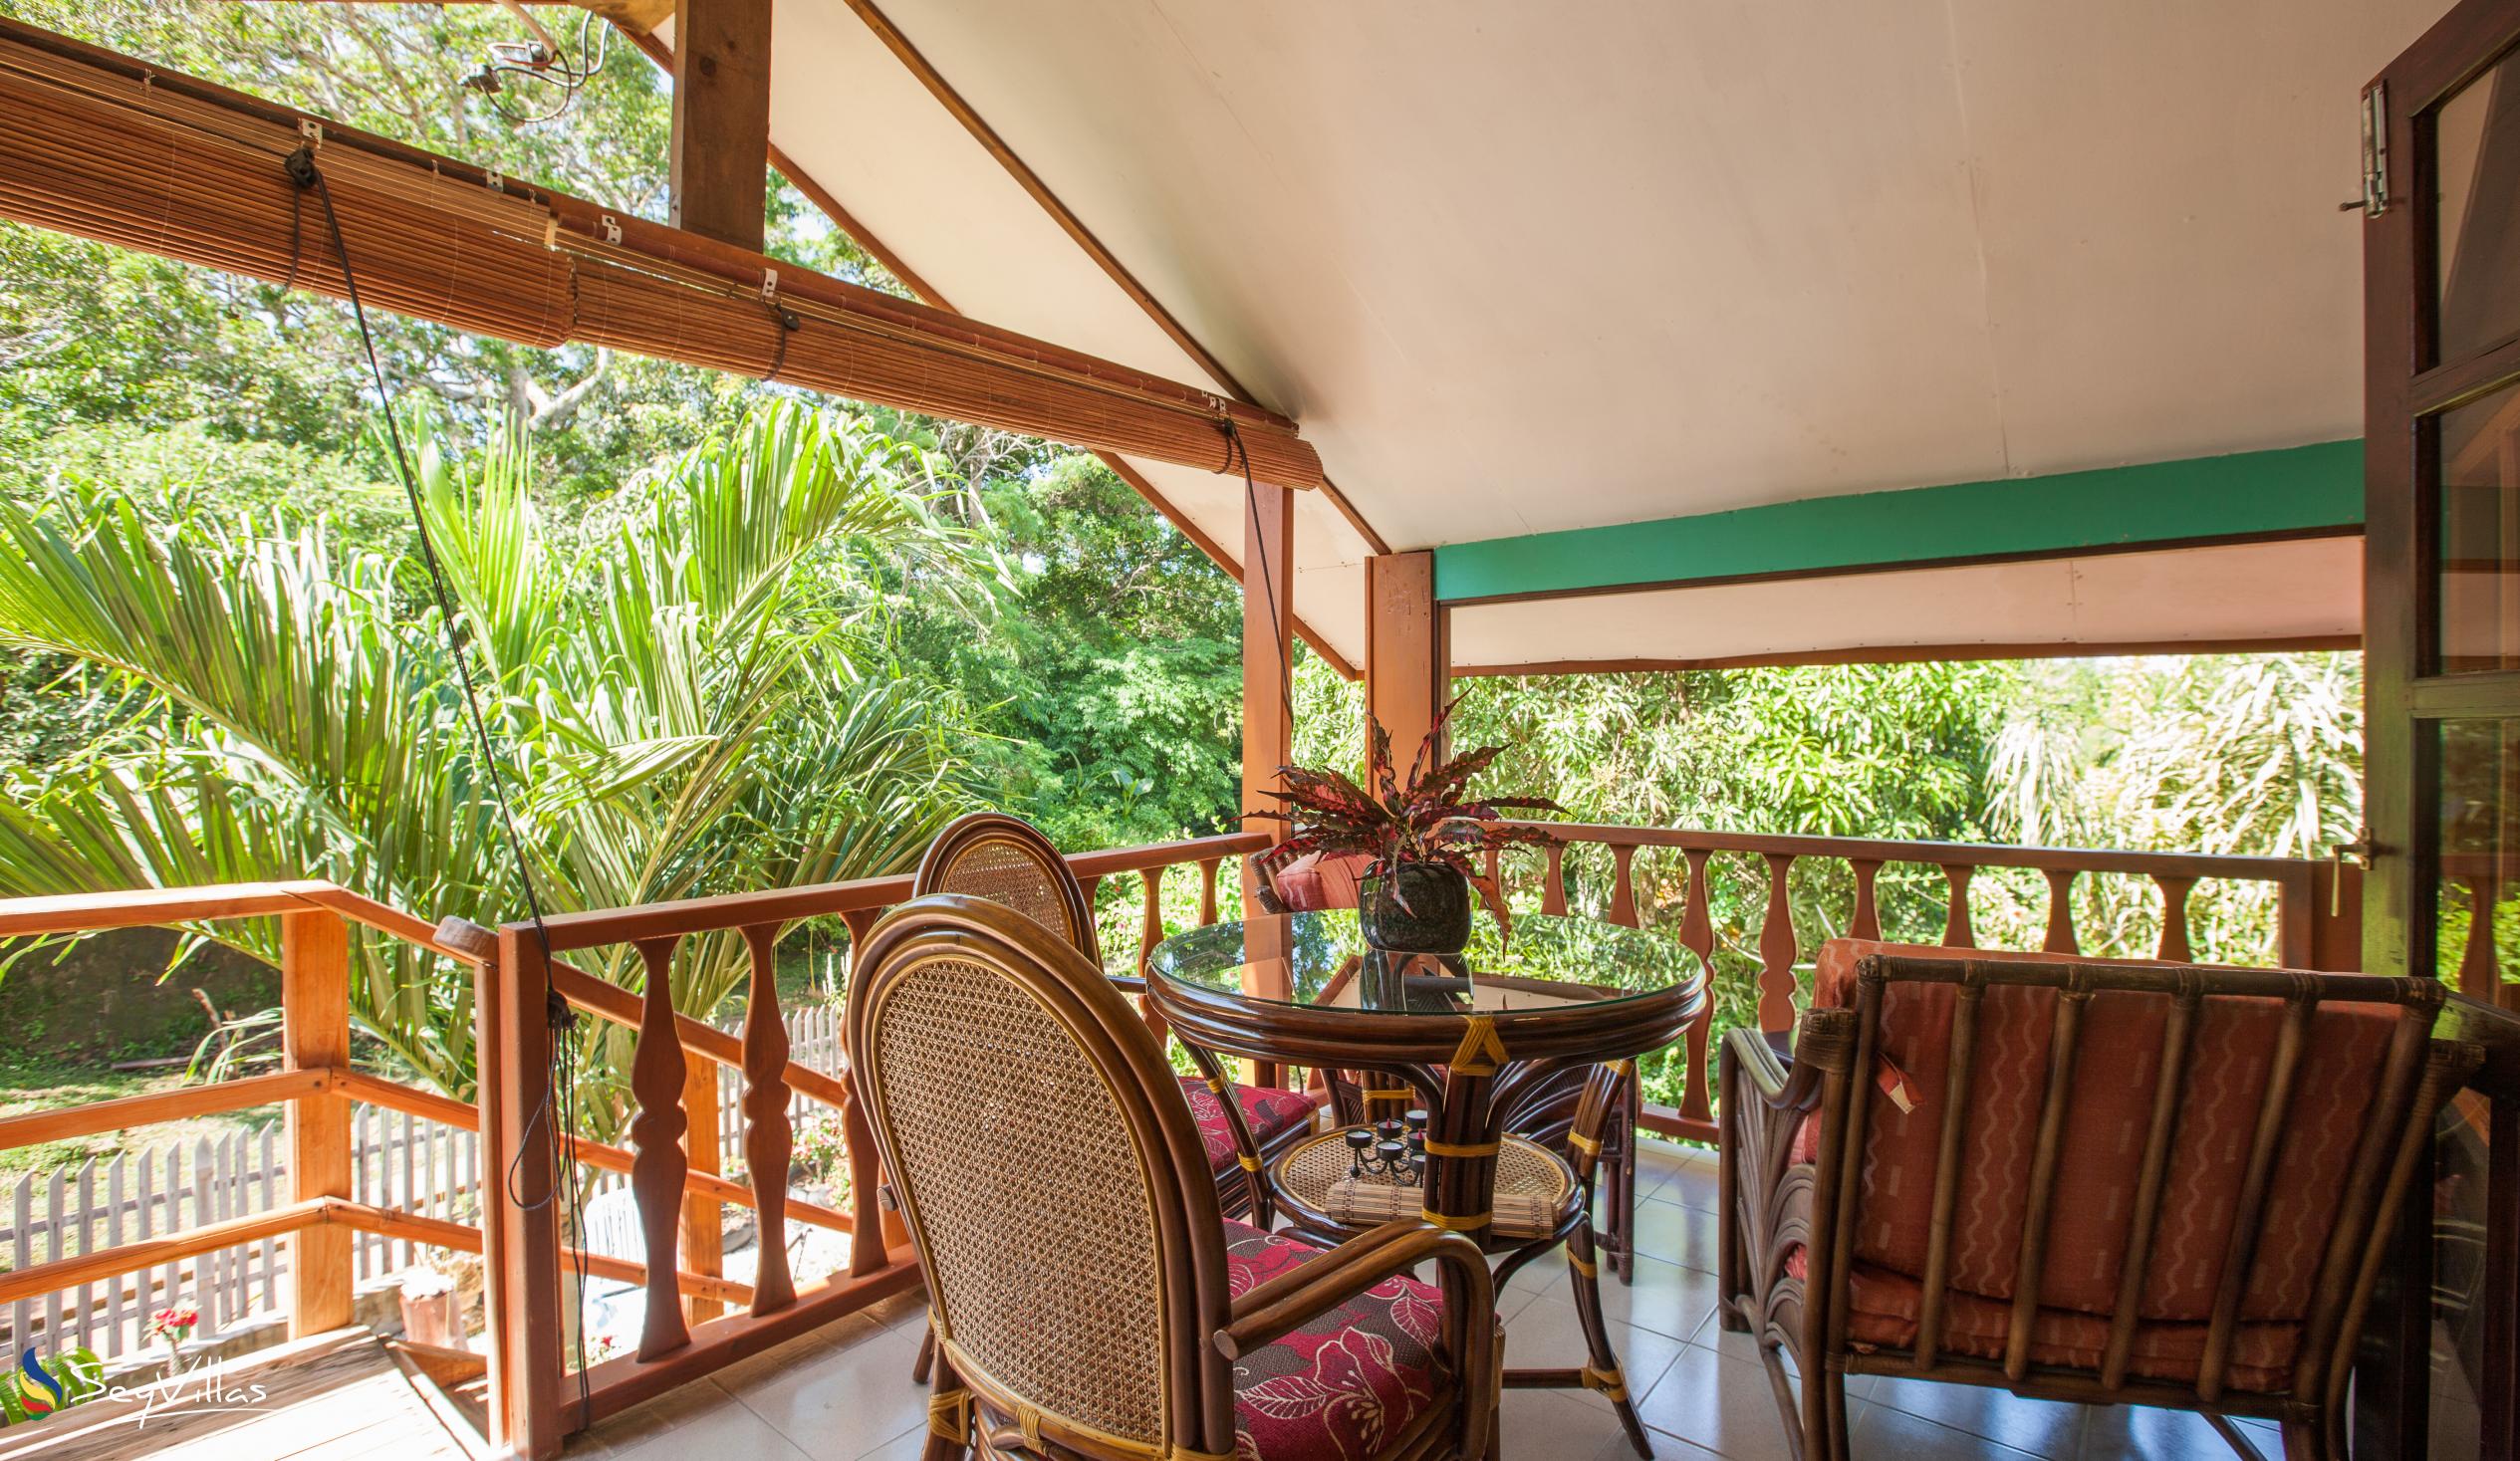 Foto 47: Belle des Iles Guest House - Camera Doppia con balcone - La Digue (Seychelles)